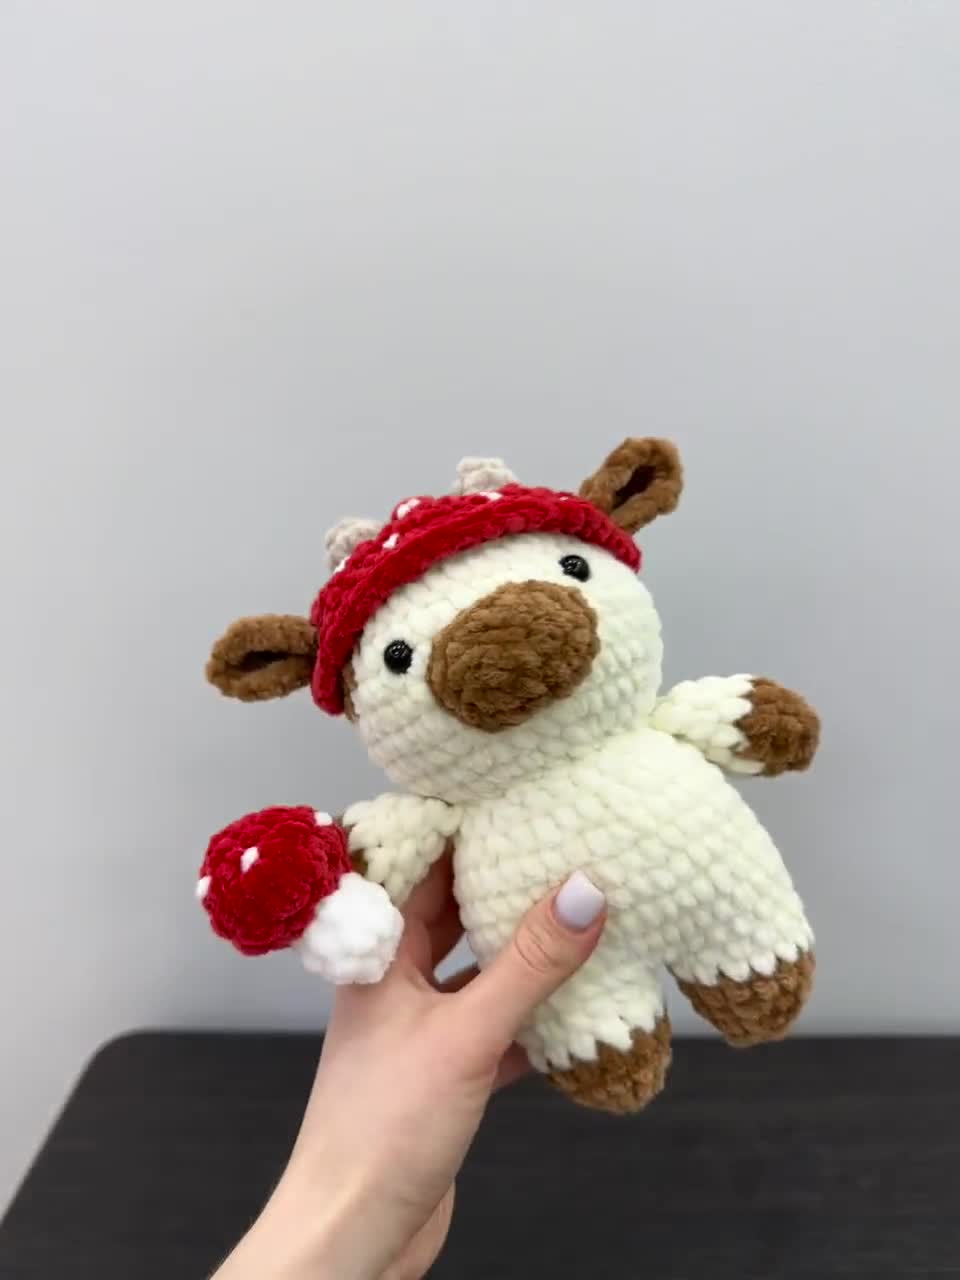 Moogan The Cow Crochet Kit Animal Crochet Includes Follow Along Videos